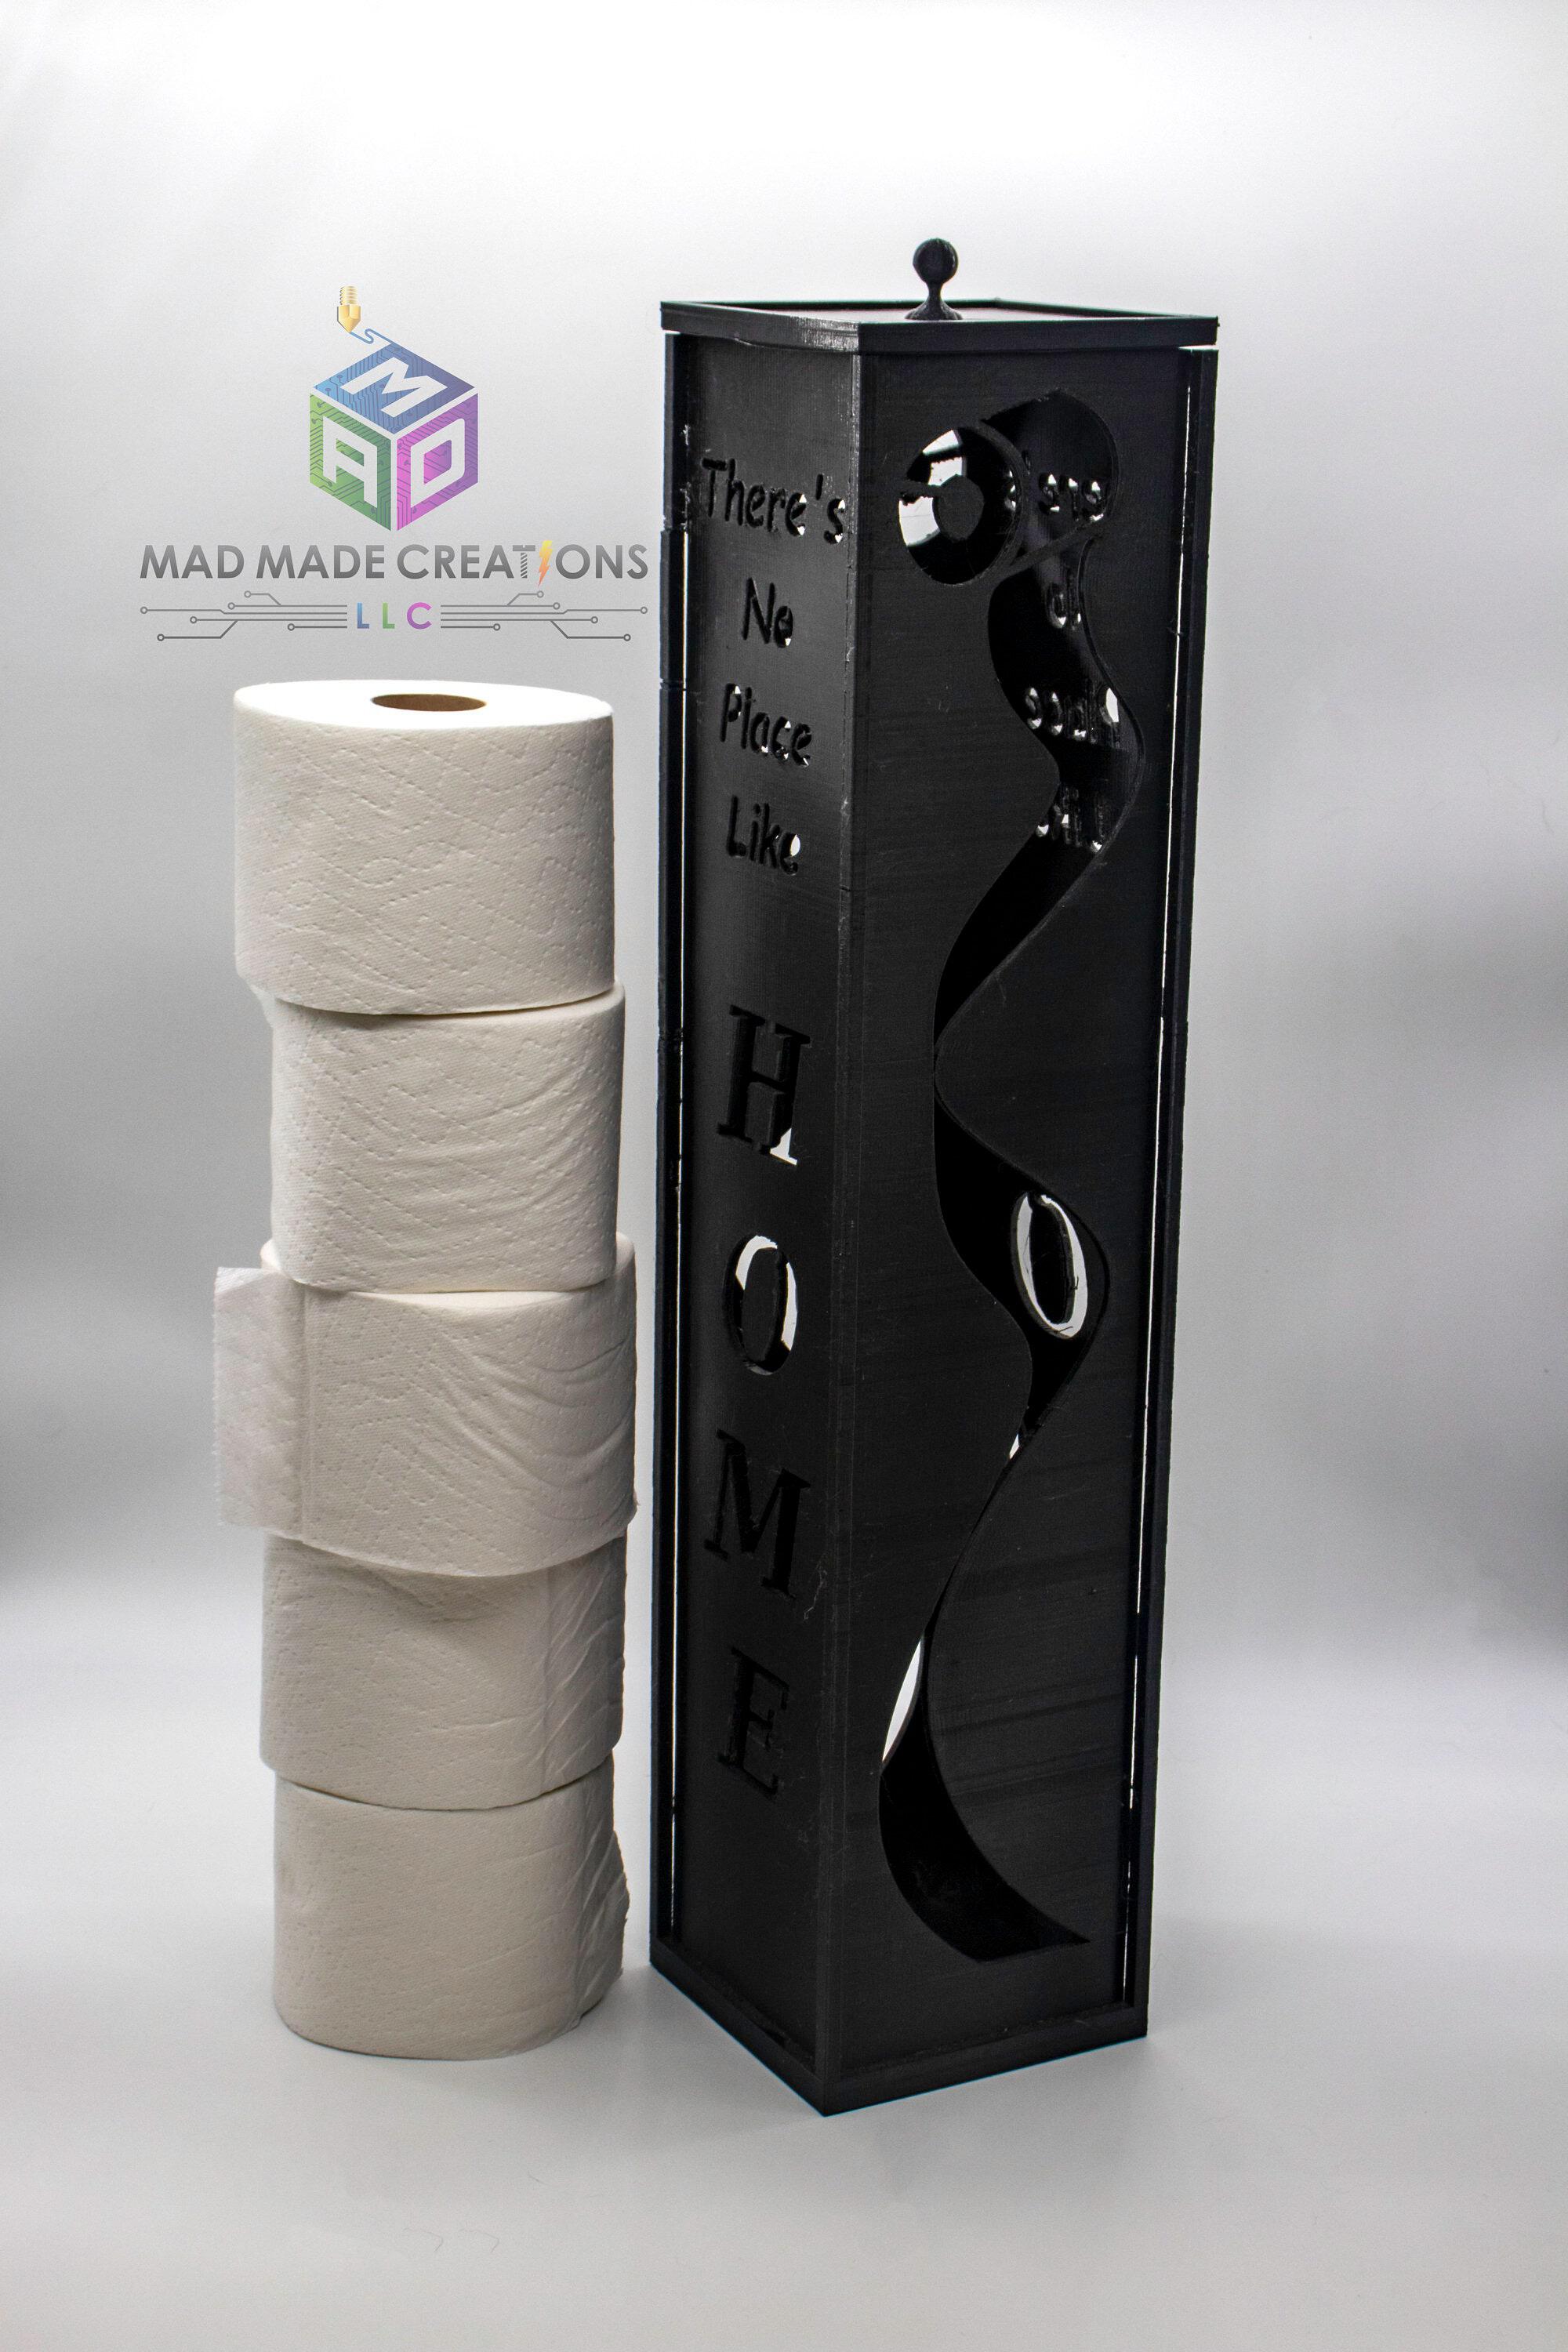 Products :: Toilet Paper Holder - Decorative Toilet Paper Storage